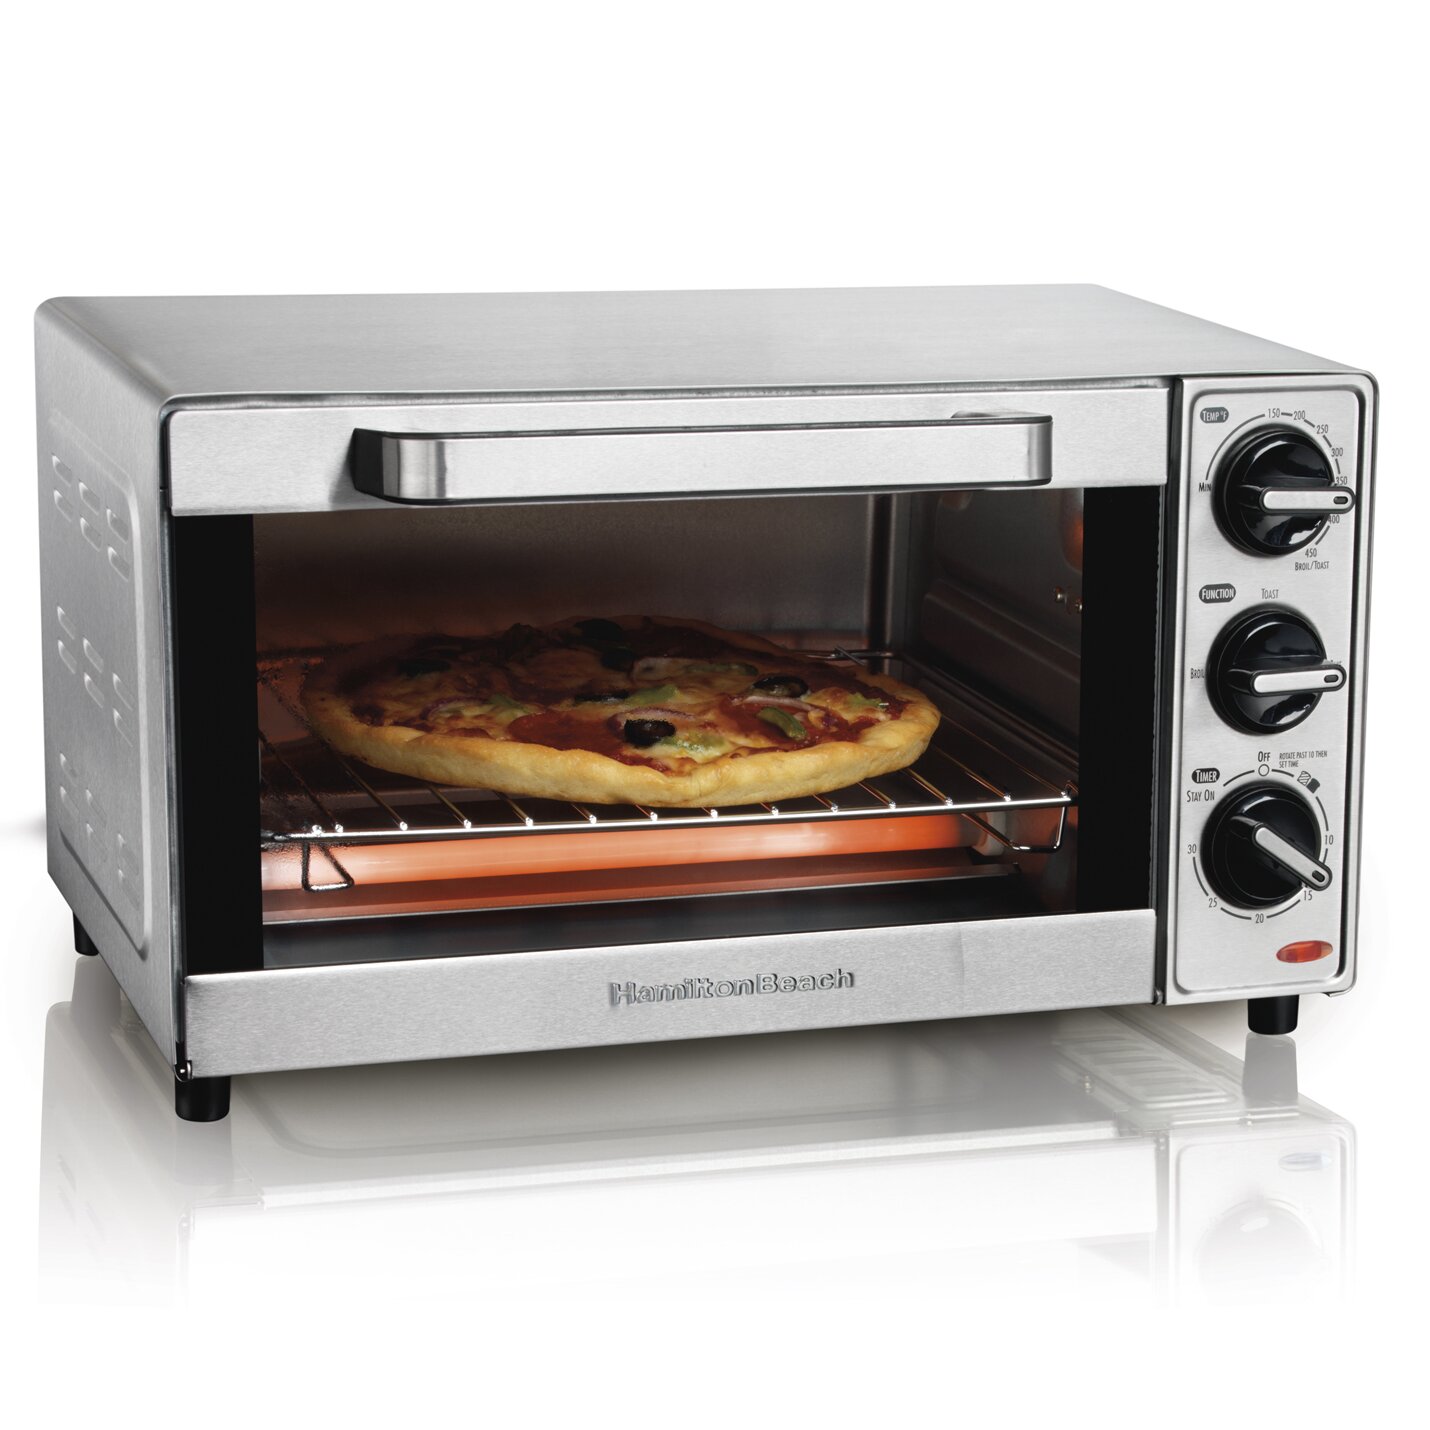 Hamilton Beach 4 Slice Toaster Oven & Reviews | Wayfair